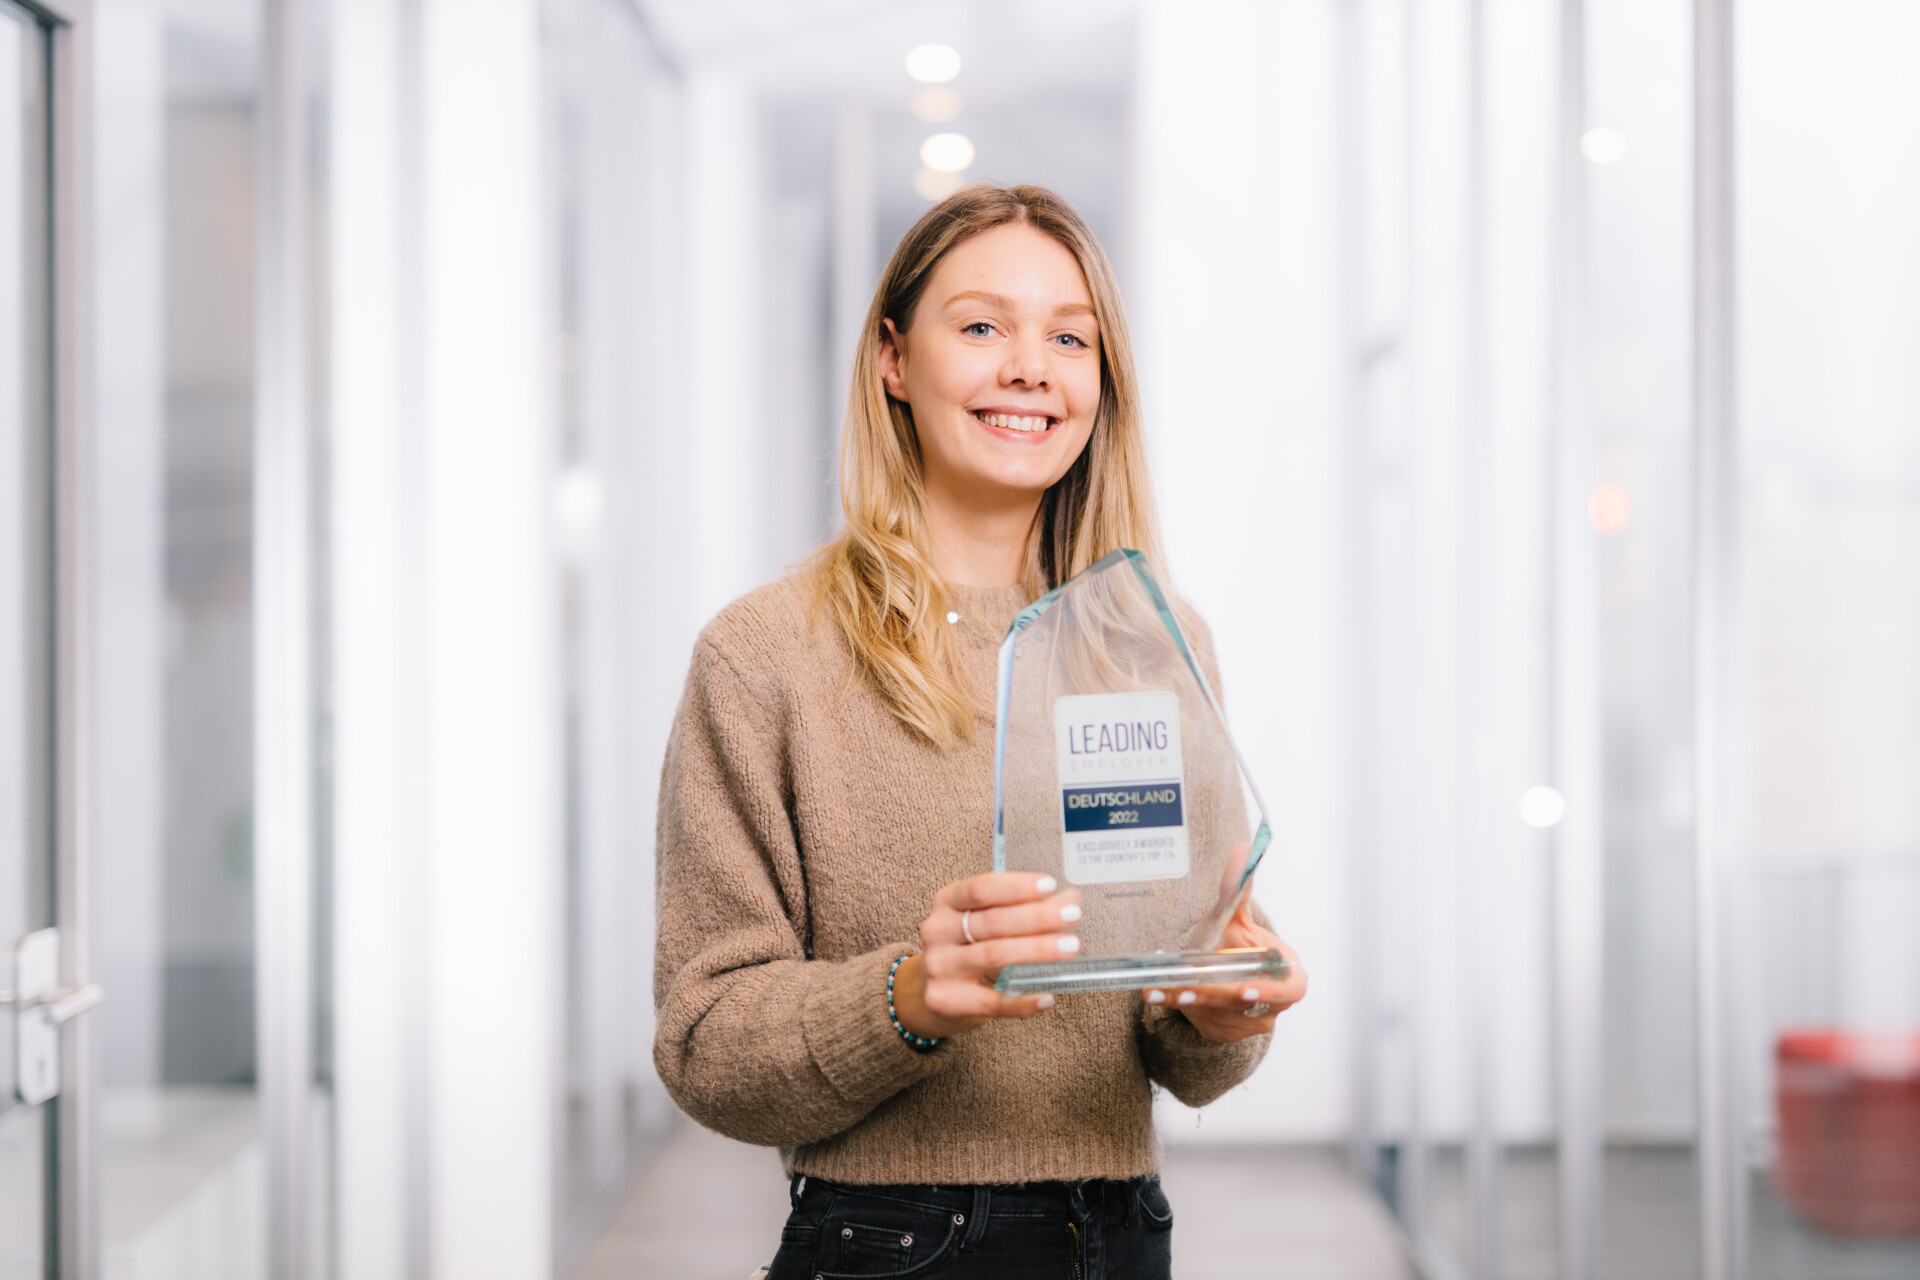 Janika Kläsener – Leading Employer Award 
symmedia – For machines 